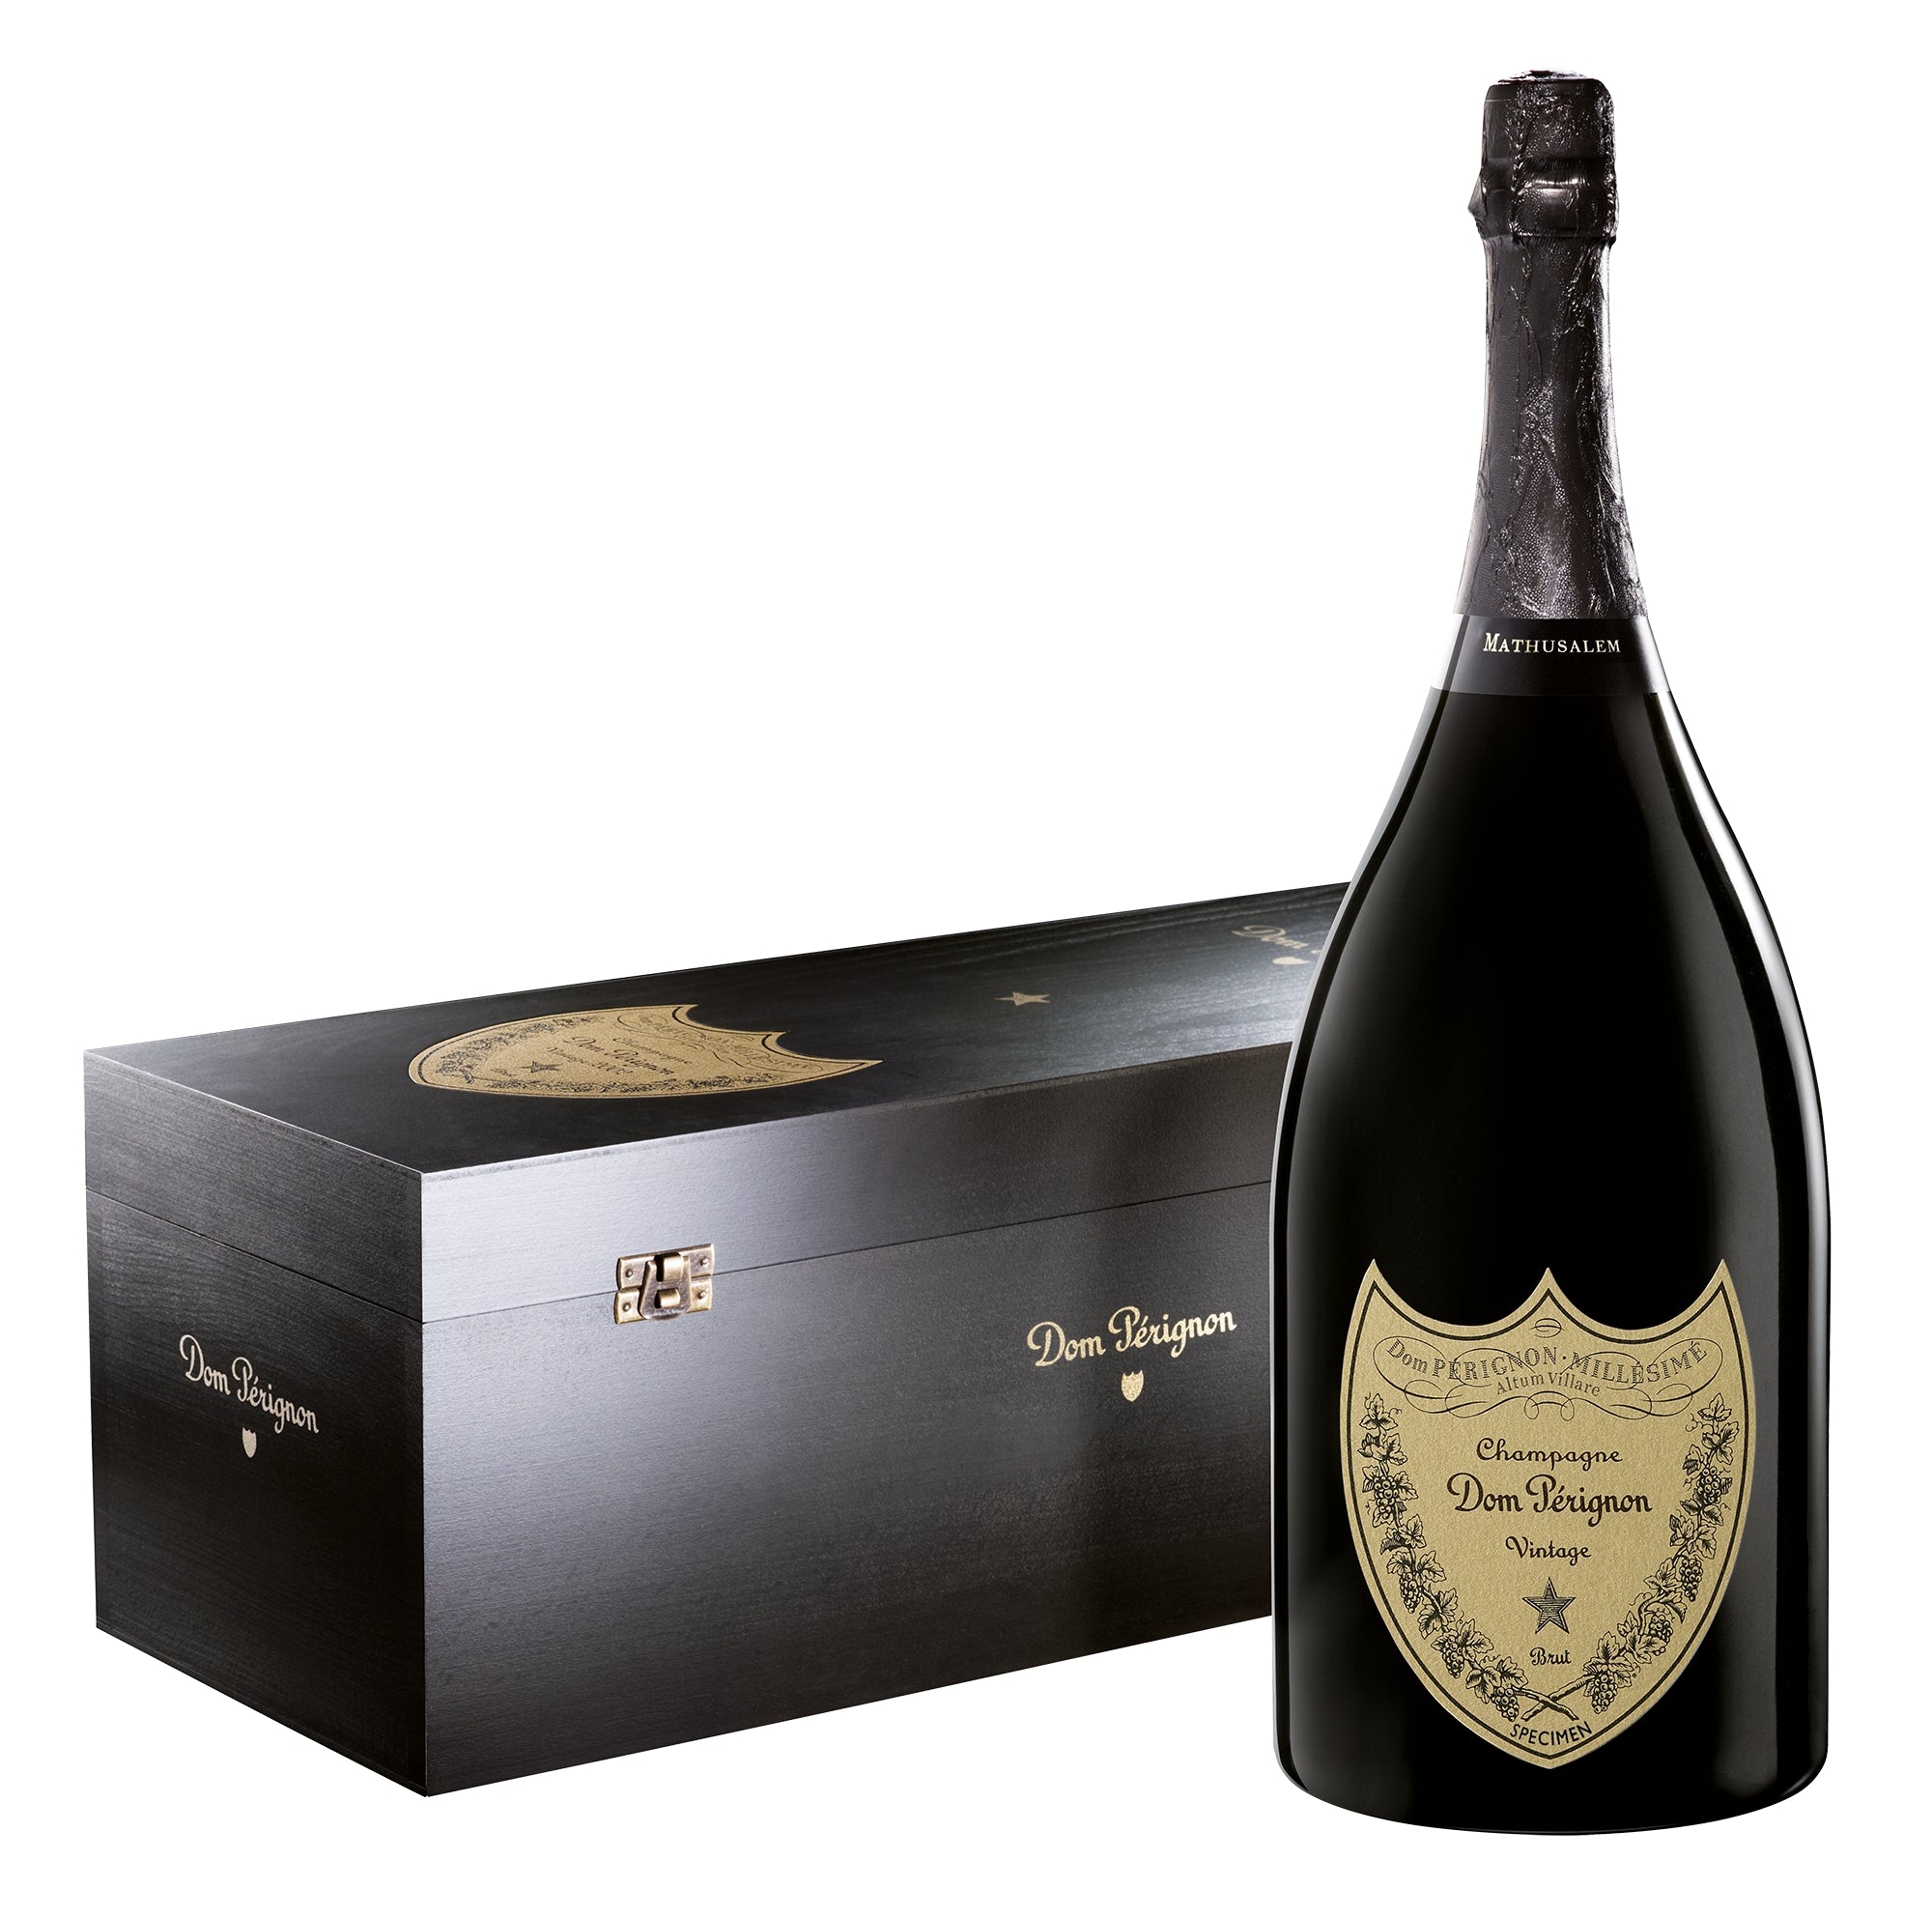 Spirits & – Perignon Dom Wine 2013 Hills Champagne